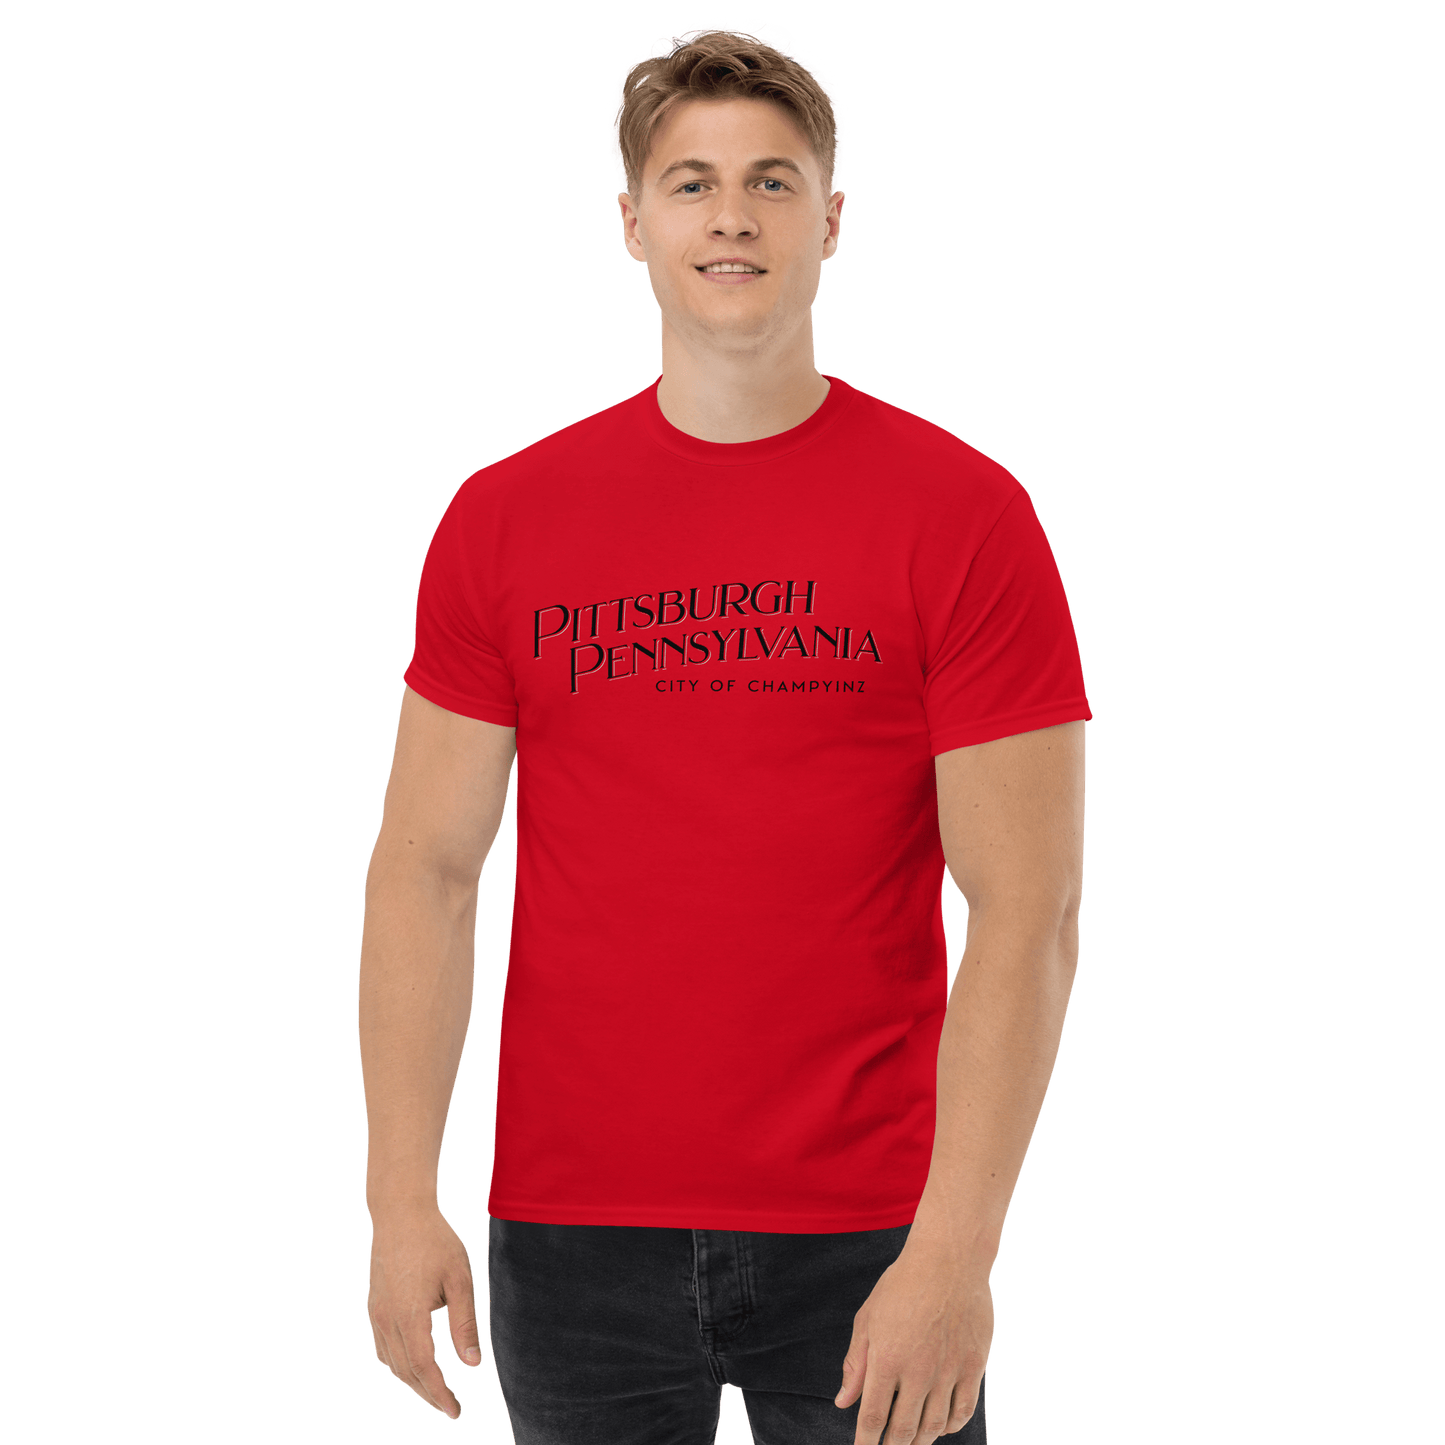 Pittsburgh Pa City of ChampYINZ T-Shirt Yinzergear Red S 